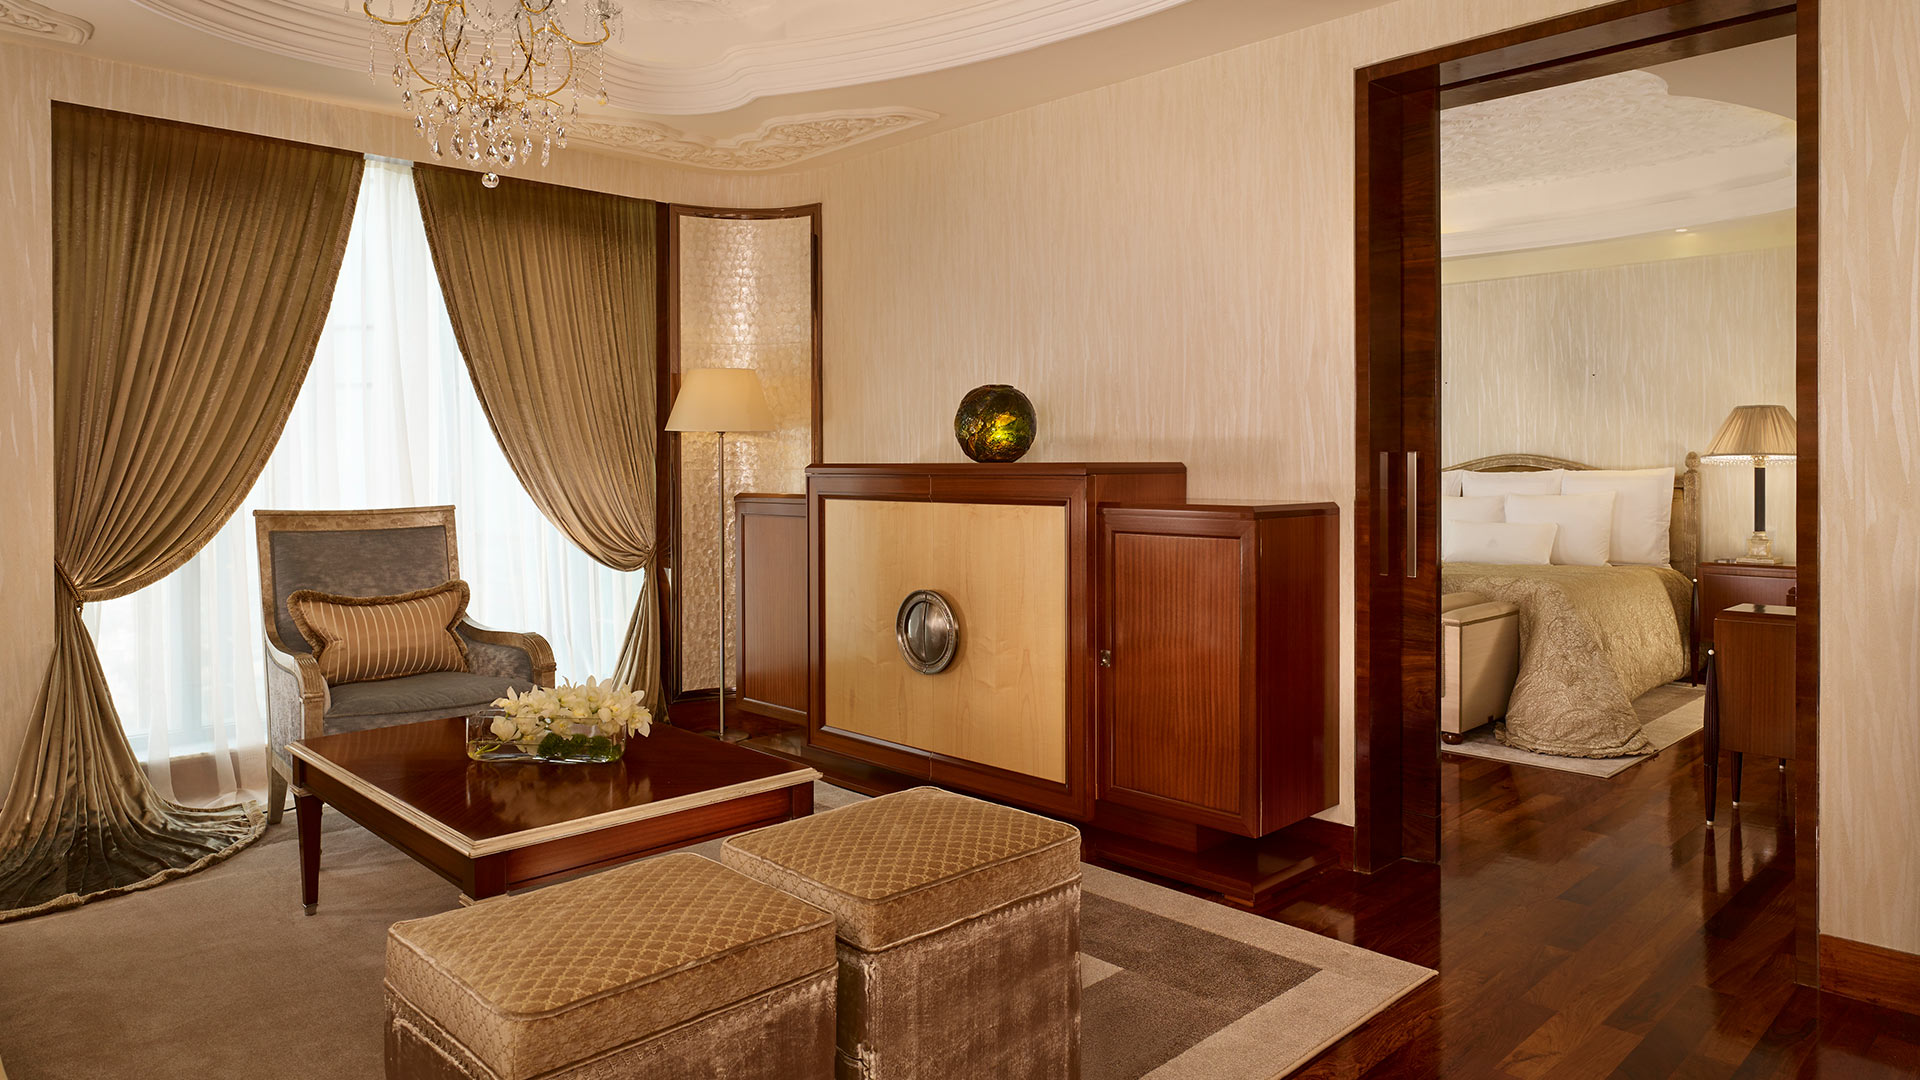 Executive Suite Provasi | Luxury Hotels in Saigon Vietnam | The Reverie Saigon